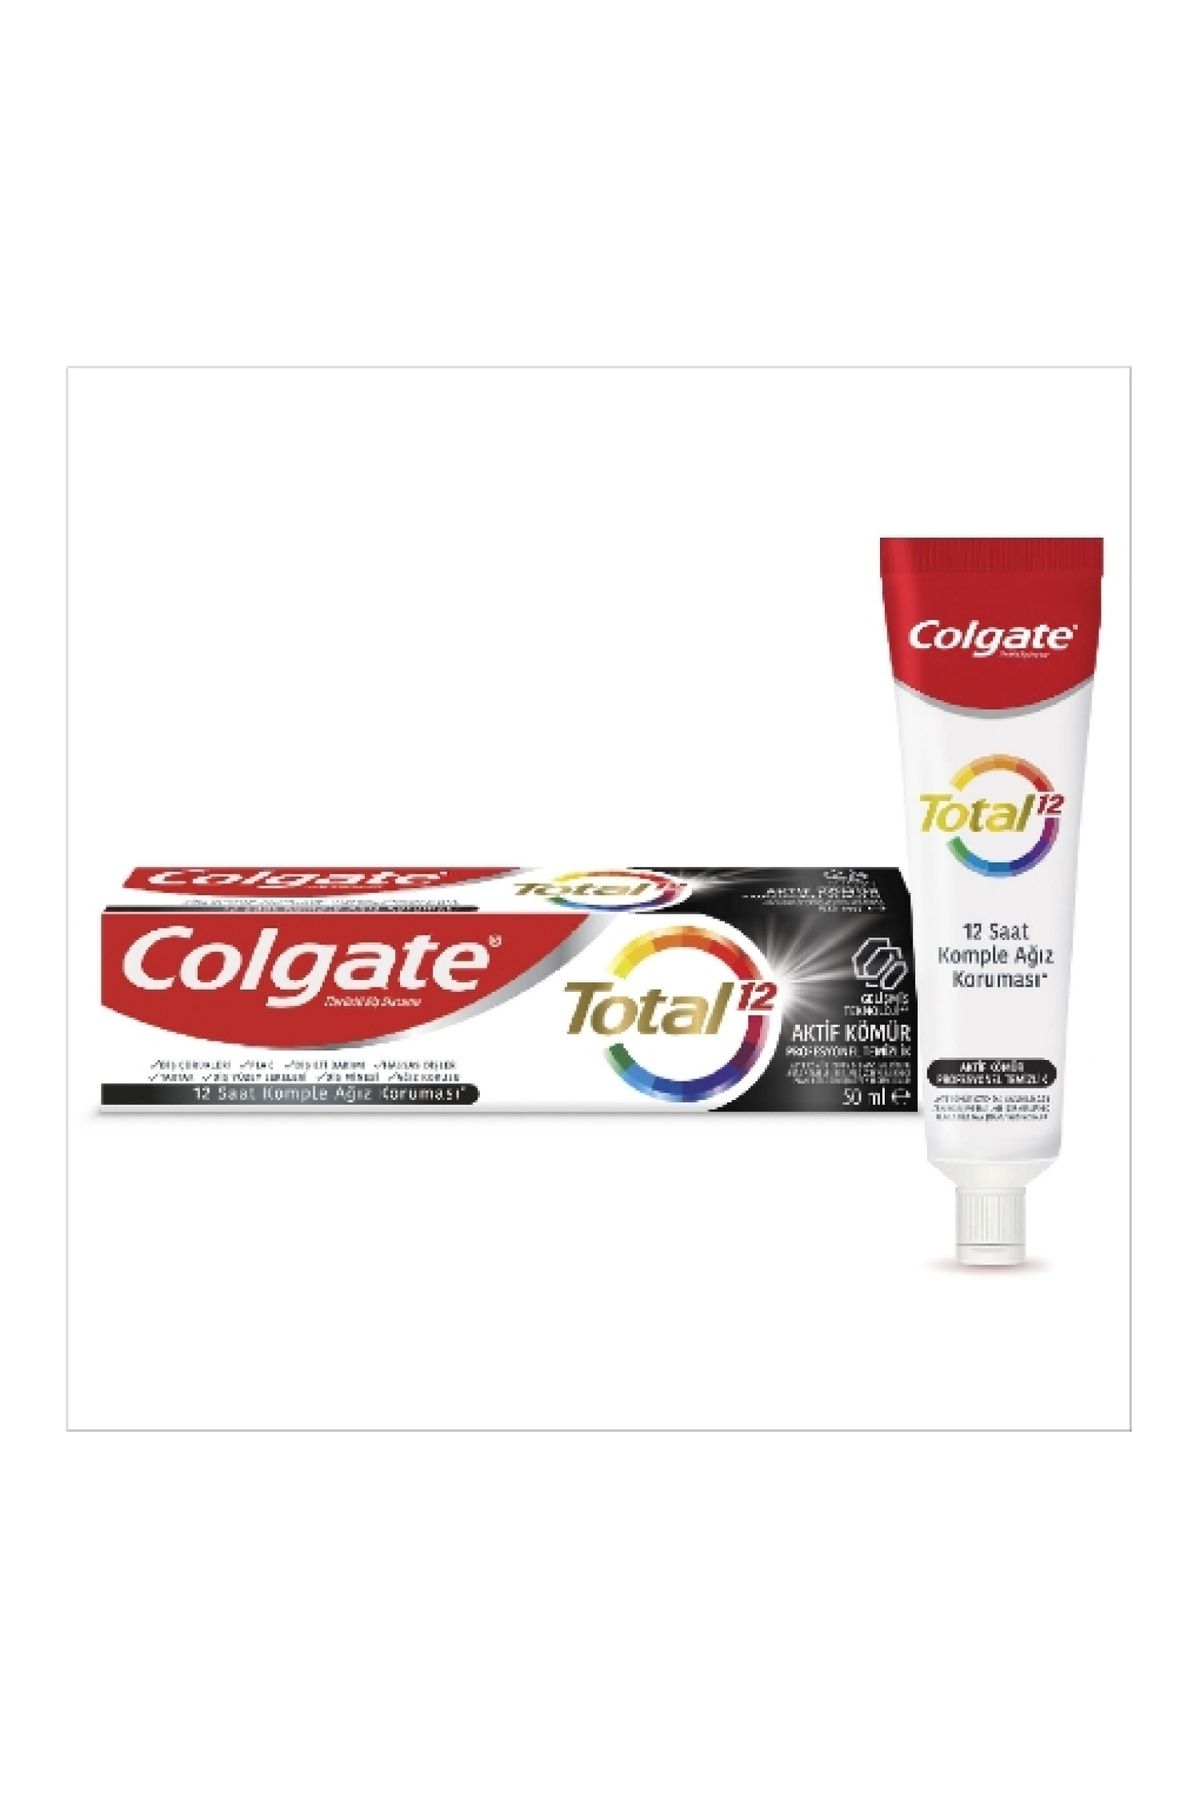 Colgate Diş Macunu Total Pro 50 ml. Aktif Kömür (24'lü)